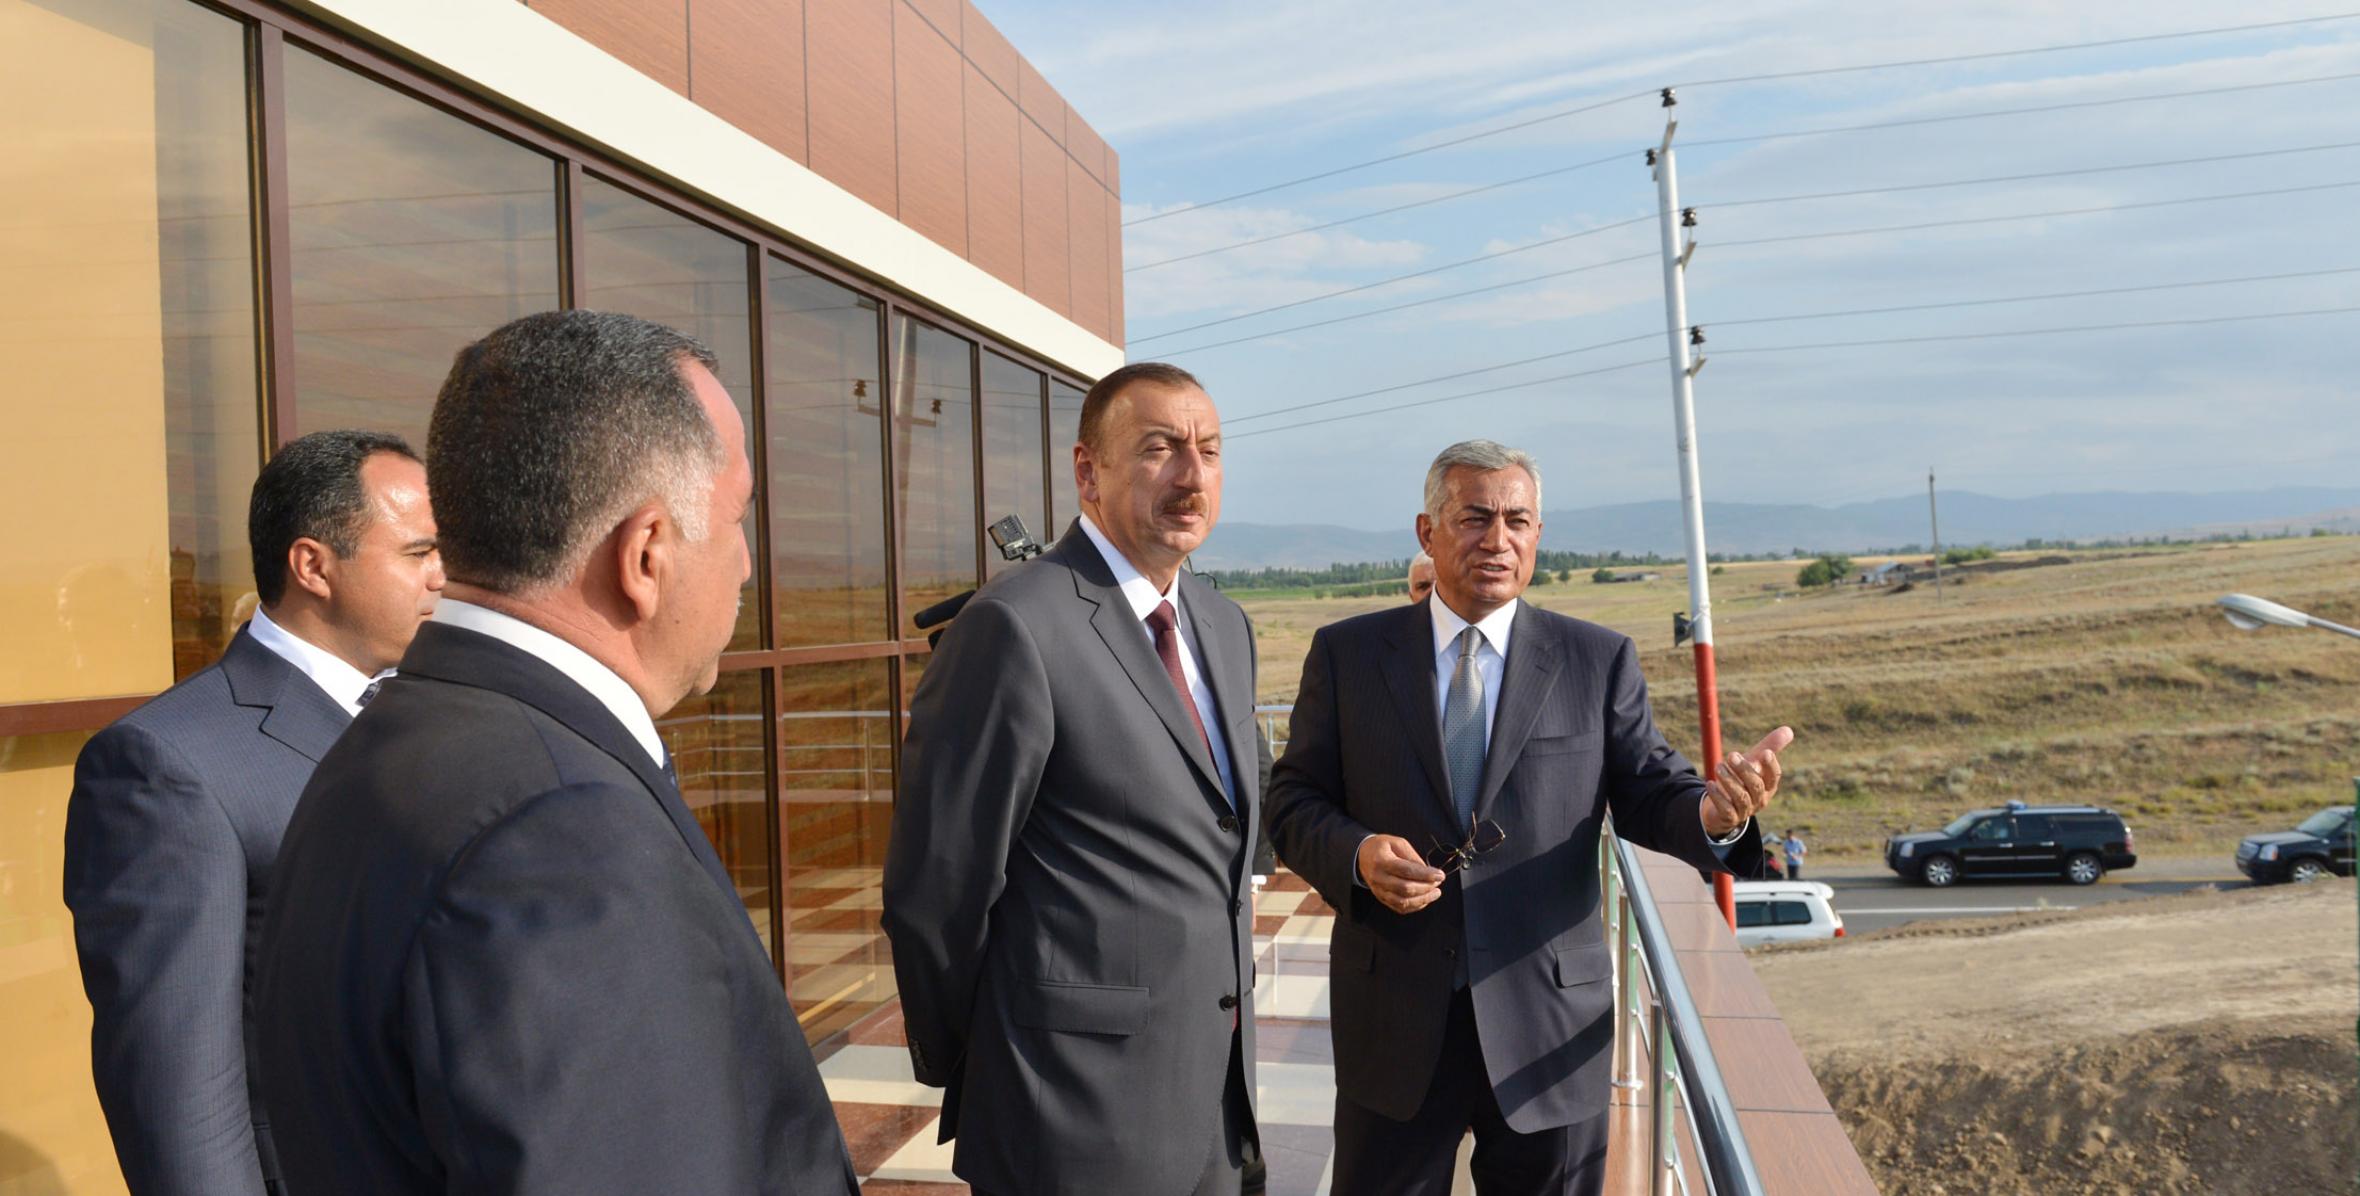 Ilham Aliyev reviewed the Agstafa paintball and shooting center